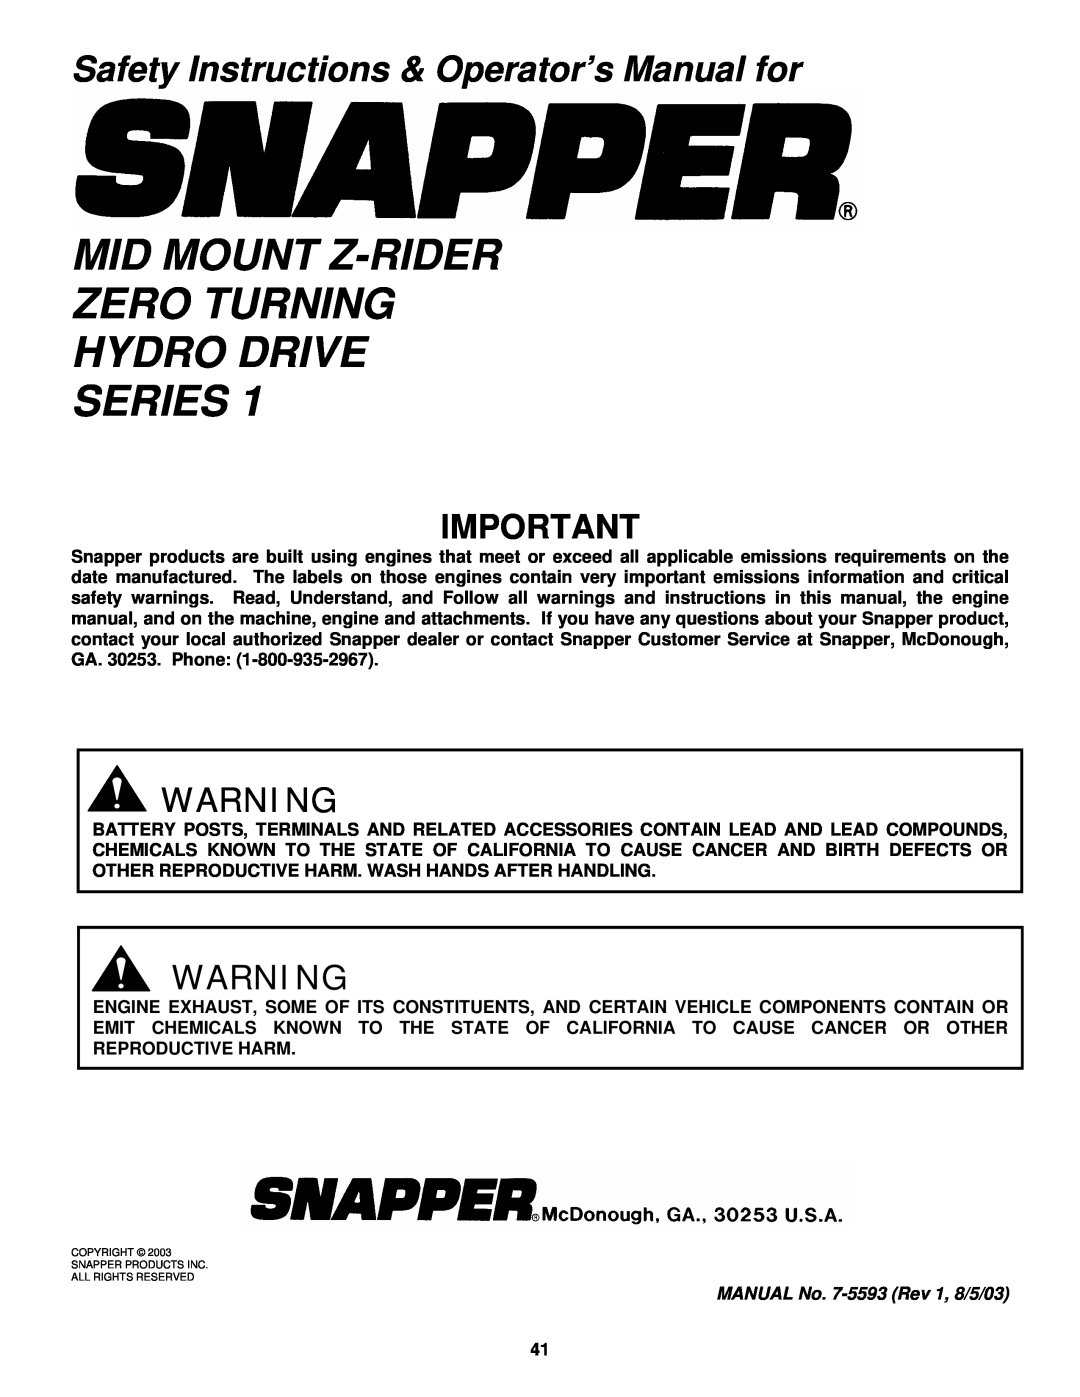 Snapper NZMJ23521KH, NZMJ25611KH Mid Mount Z-Rider Zero Turning Hydro Drive Series, MANUAL No. 7-5593Rev 1, 8/5/03 